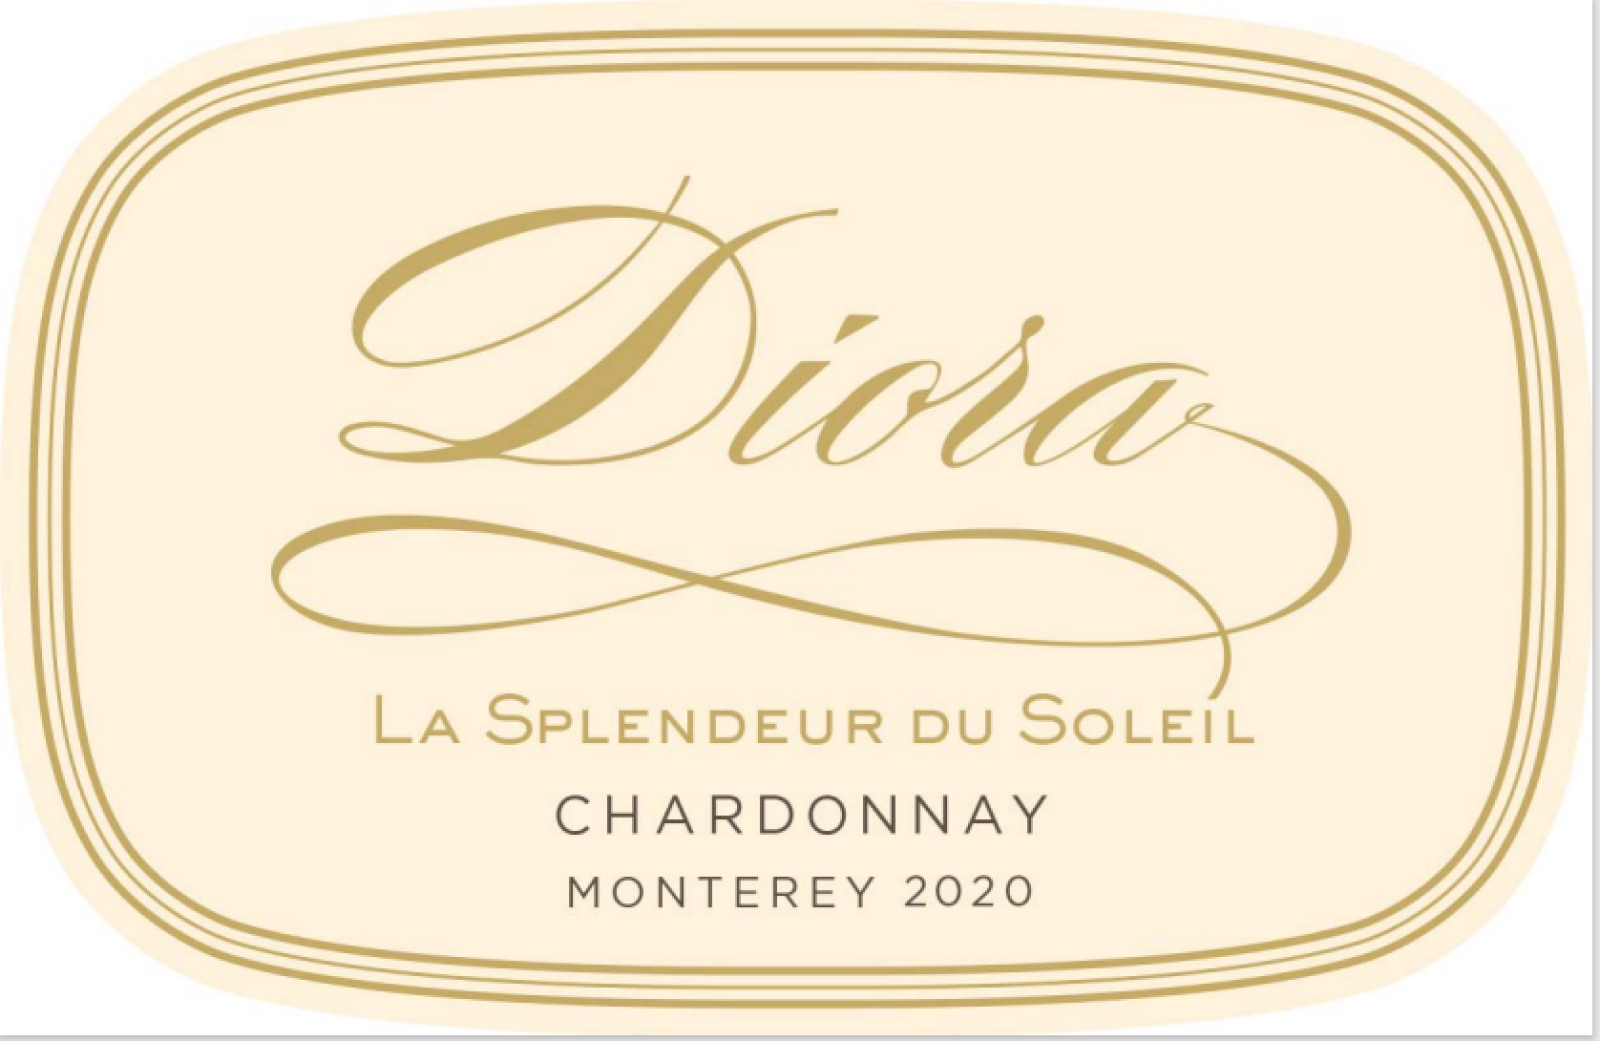 Diora La Splendeur Du Soleil Chardonnay 2020